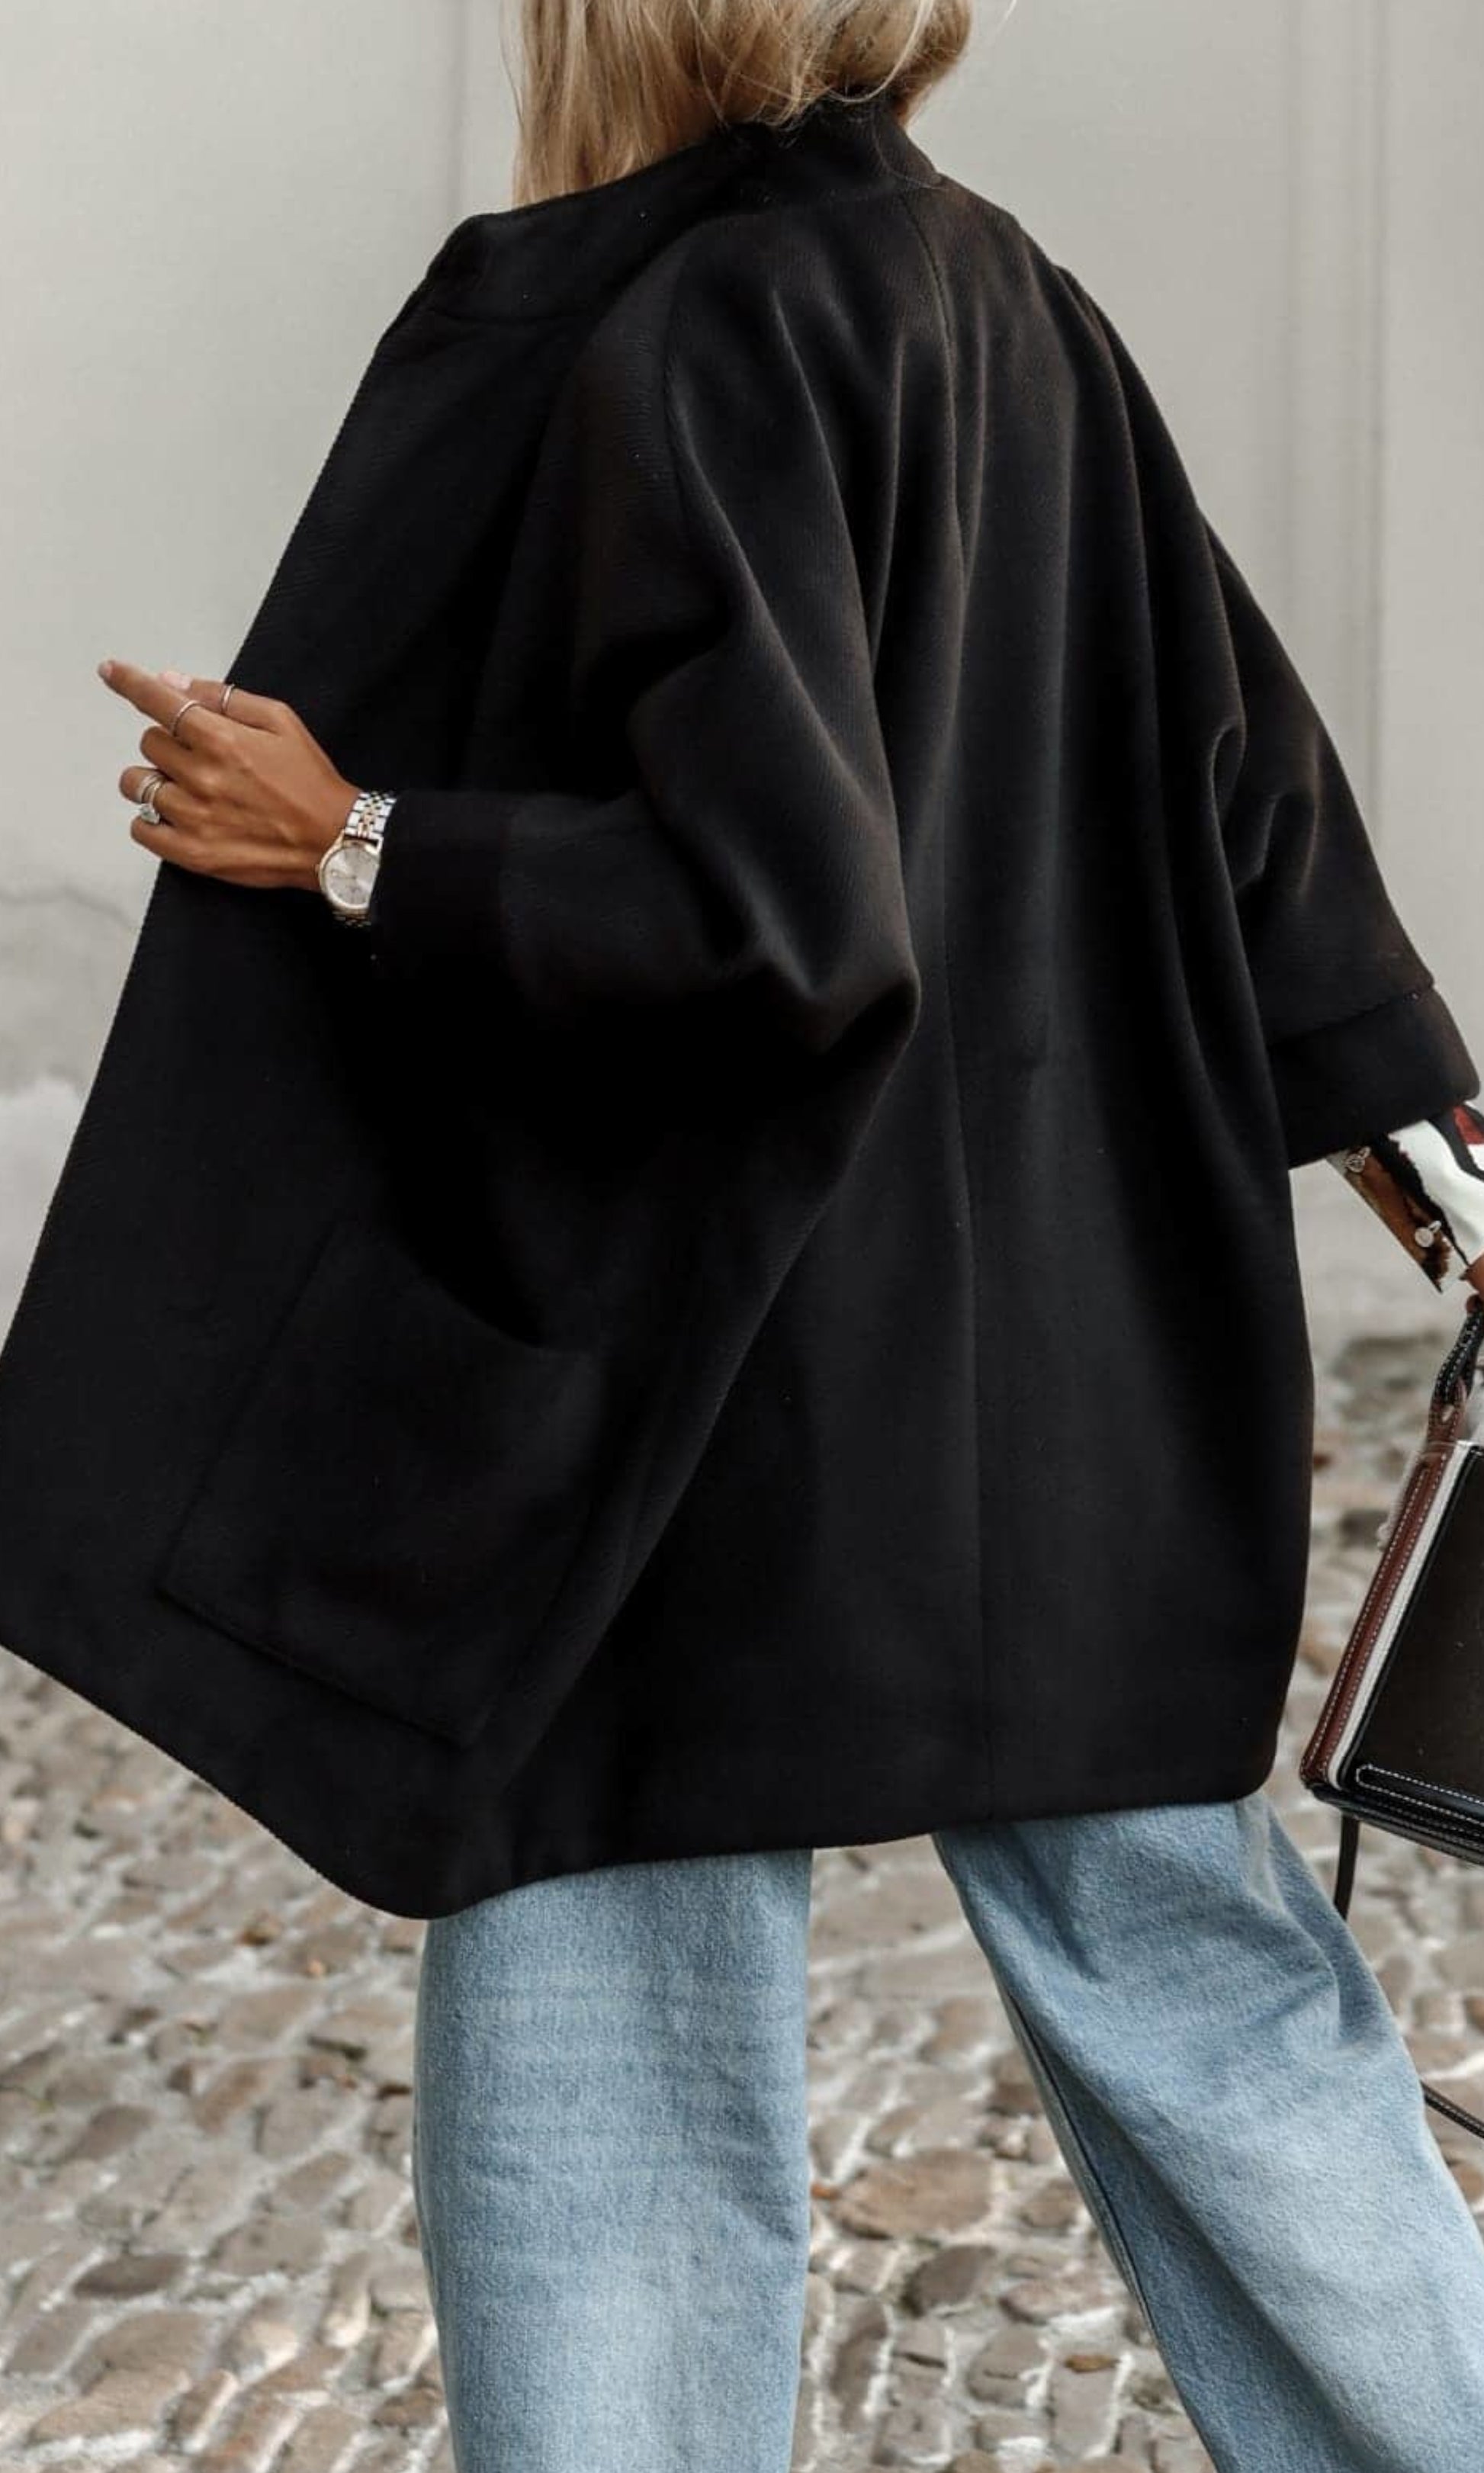 Mantel zwart achterkant